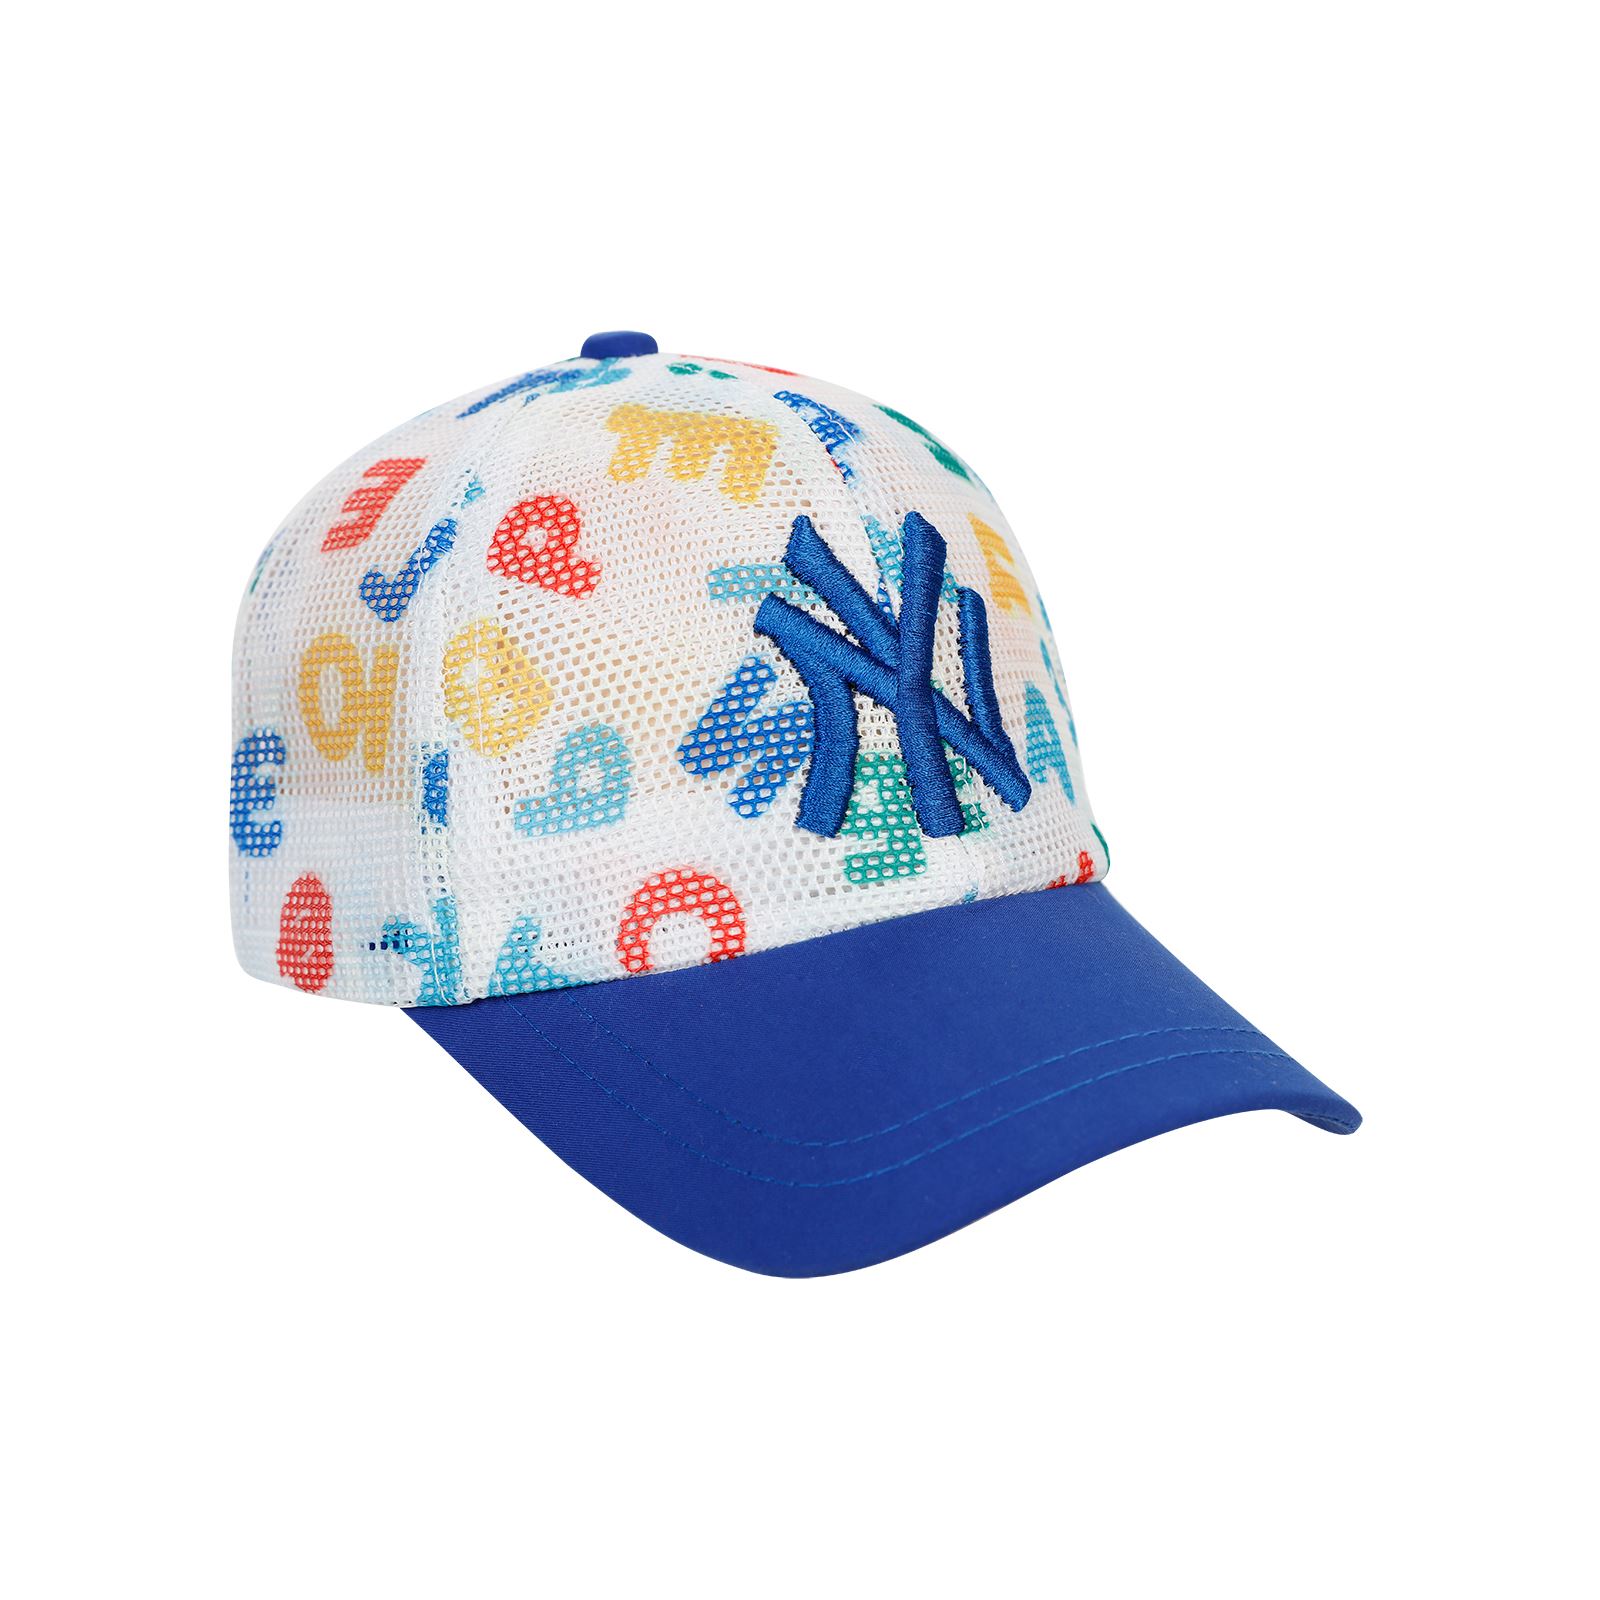 Civil Boys Erkek Çocuk Kep Şapka 6-9 Yaş Mavi